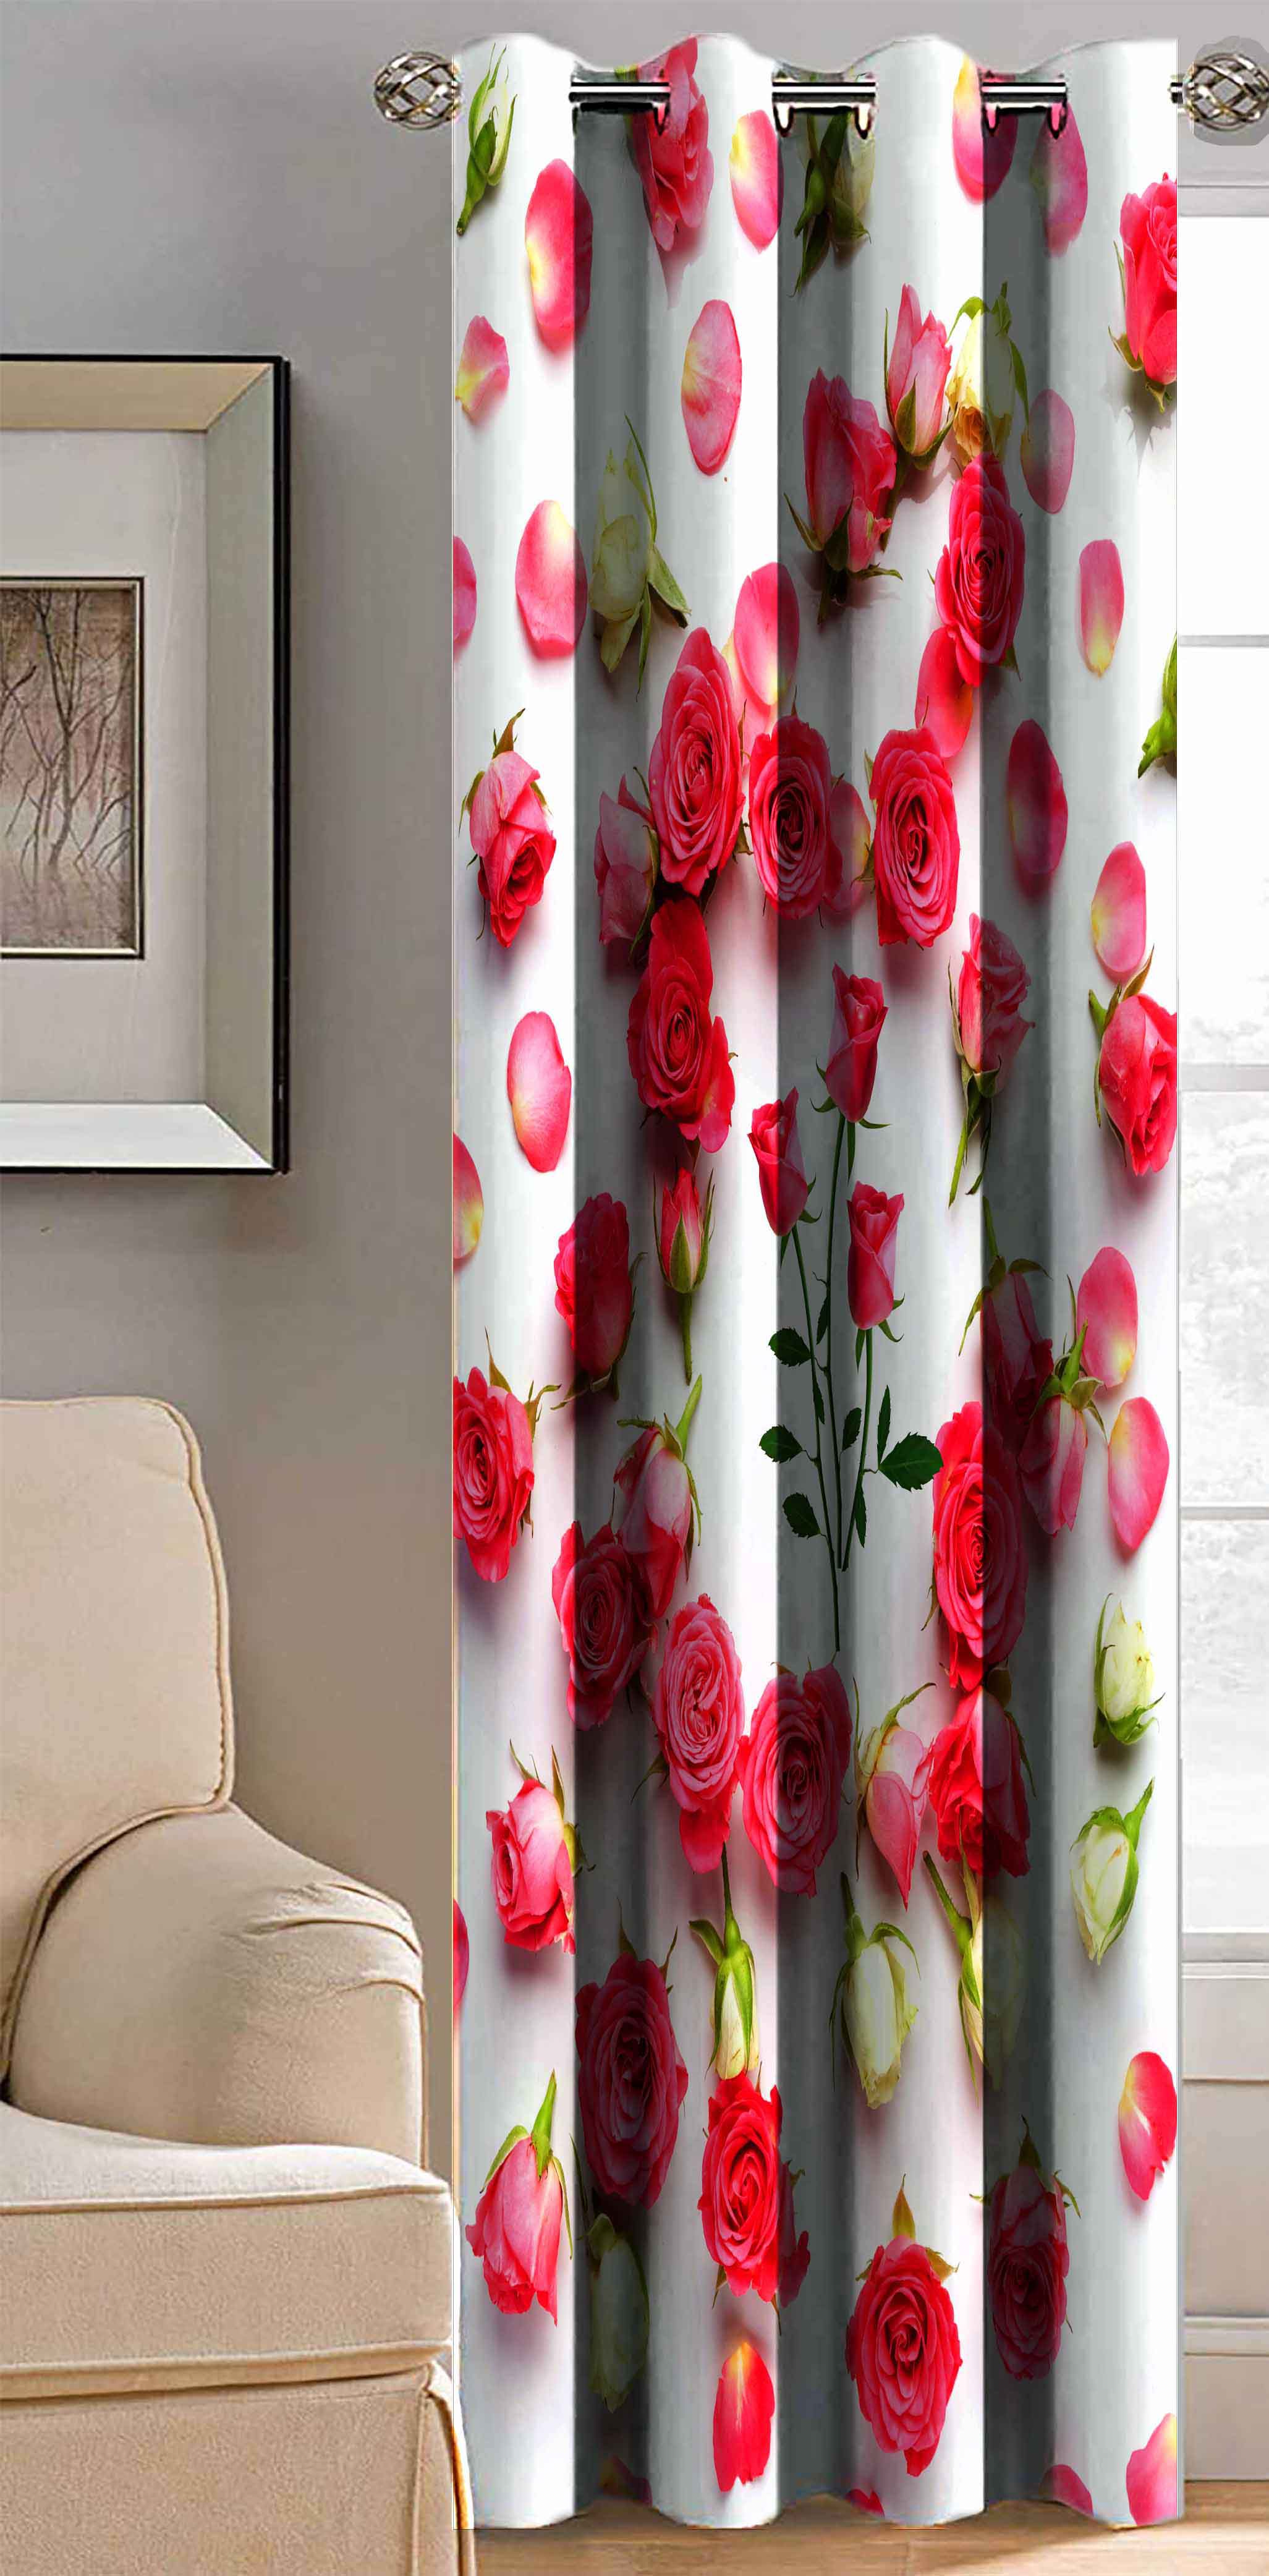     			BELLA TRUE Floral Semi-Transparent Curtain 5 ft Pack of 1 Red